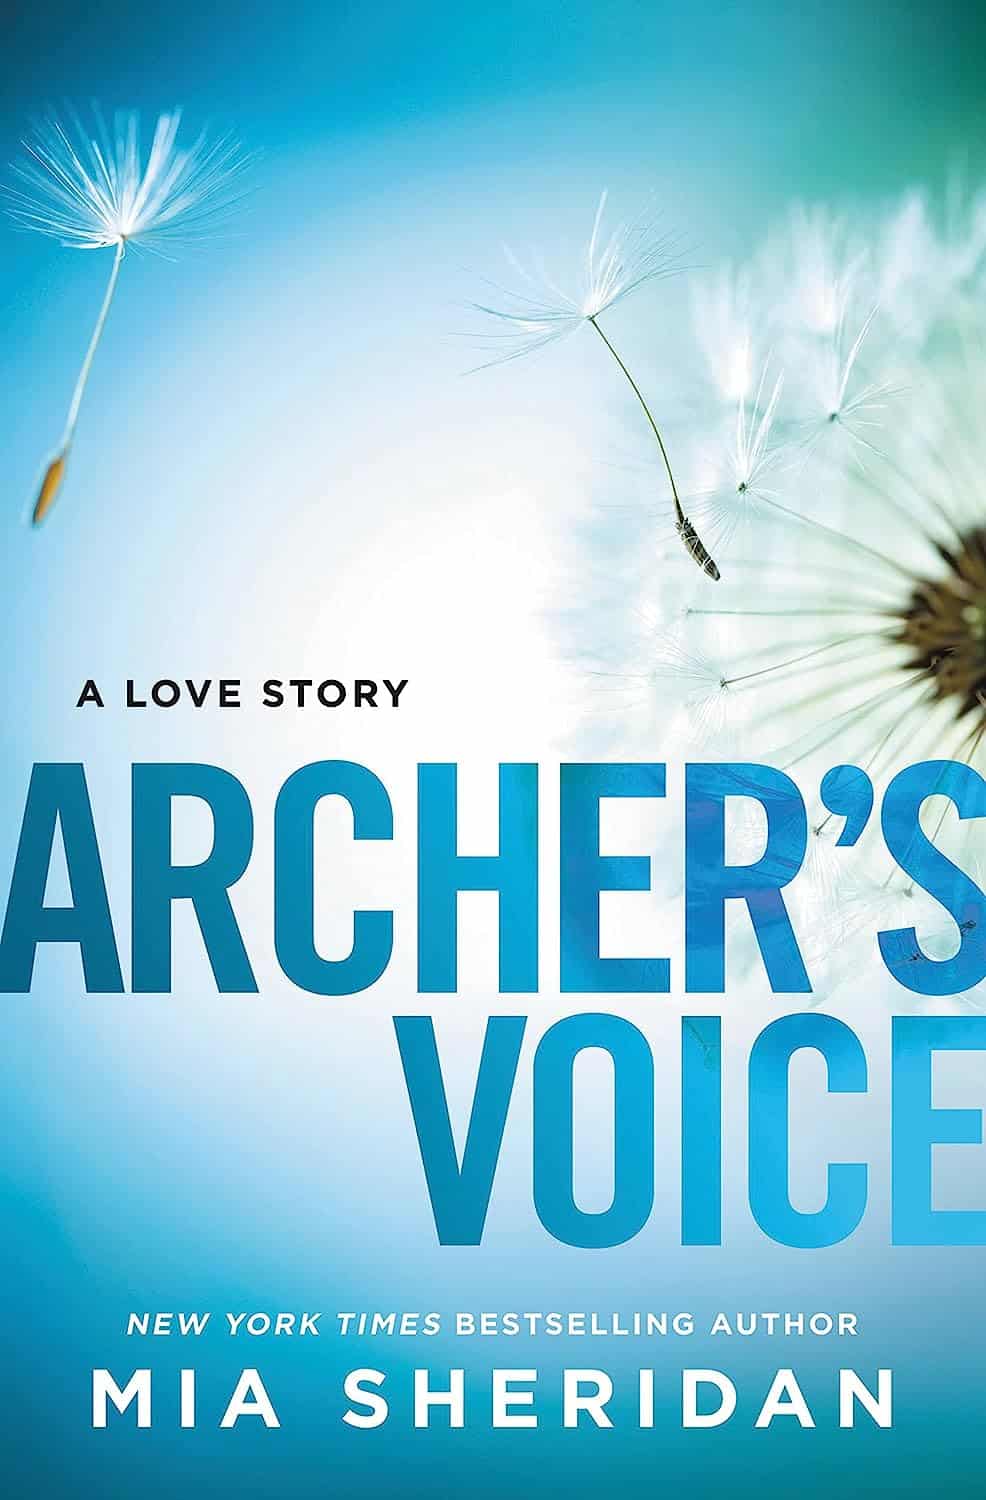 Archer’s Voice by Mia Sheridan